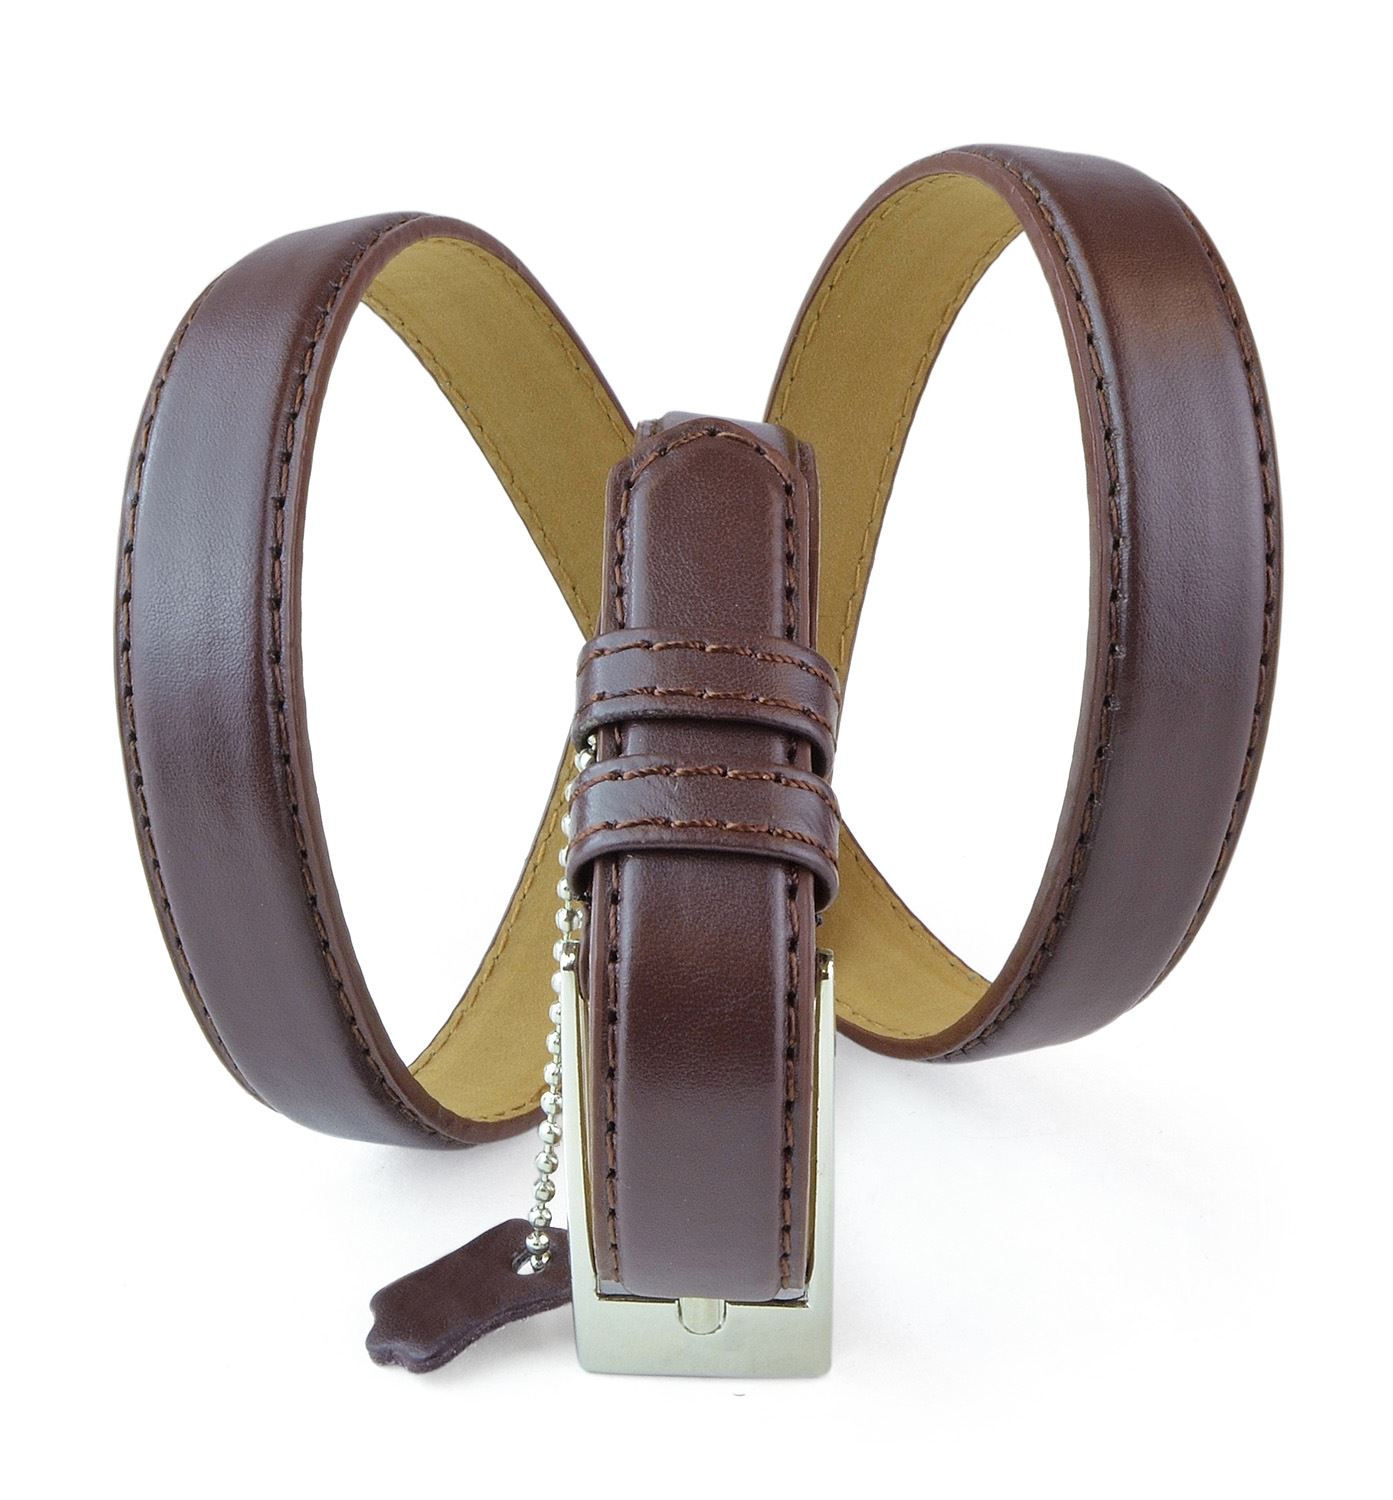 Belle Donne - Women's Solid Color Faux Leather 3/4" Belt - Brown - Medium